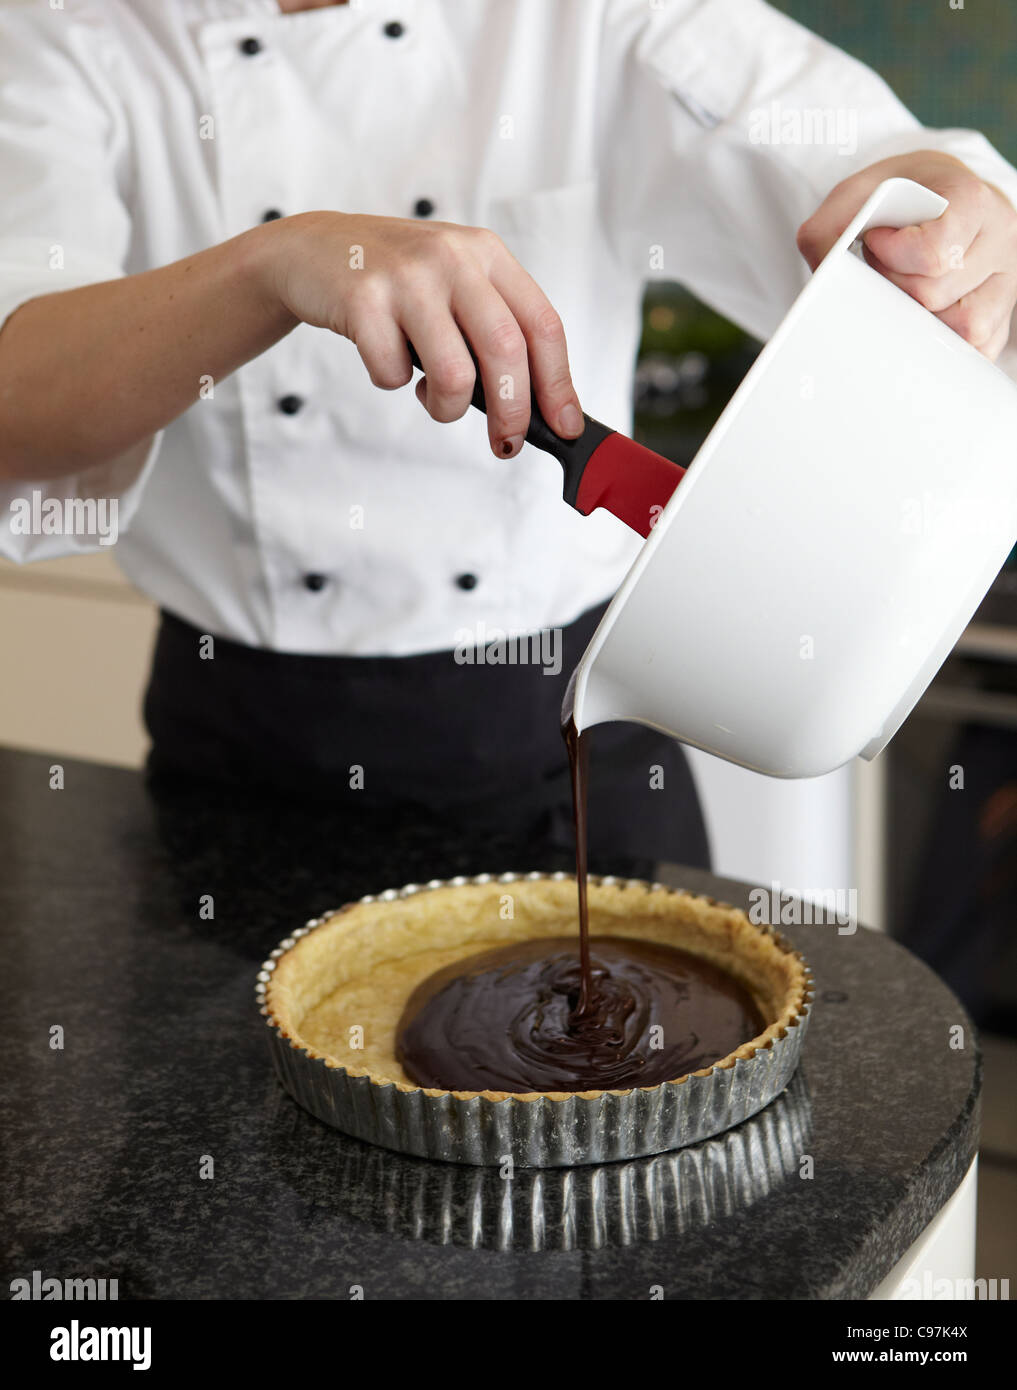 Chef making a chocolate torte. Stock Photo